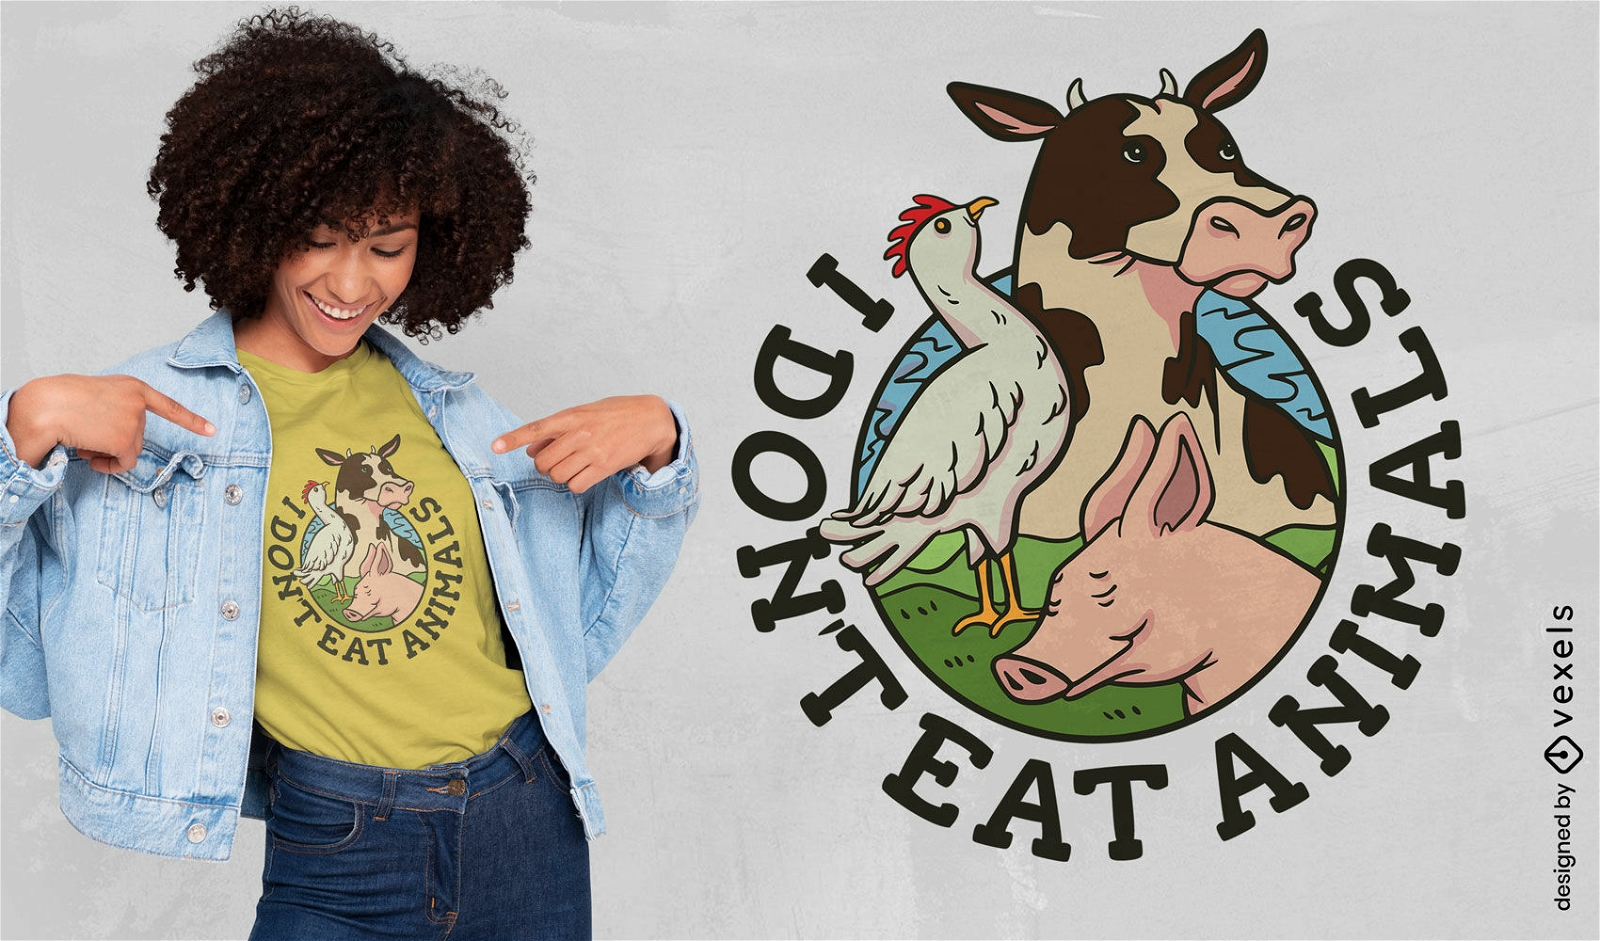 Don't eat animals vegan t-shirt design